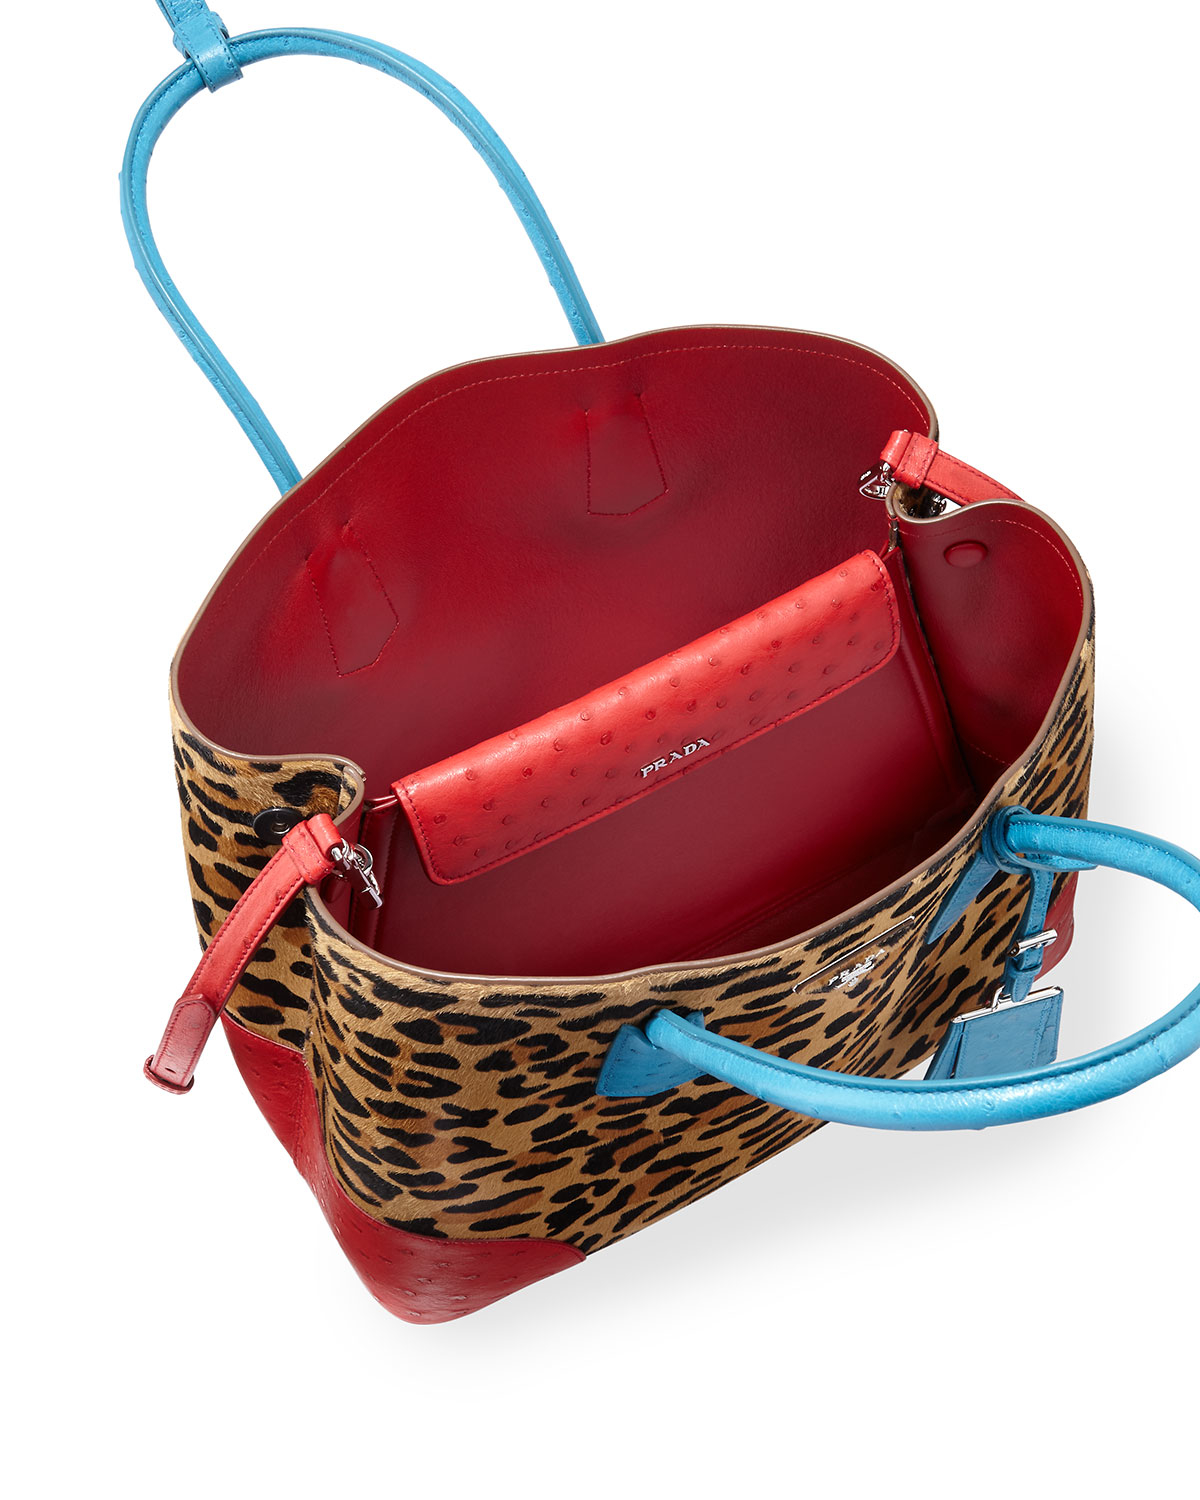 prada replicas handbags - Prada Calf Hair \u0026amp; Ostrich Medium Double Tote Bag in Multicolor | Lyst